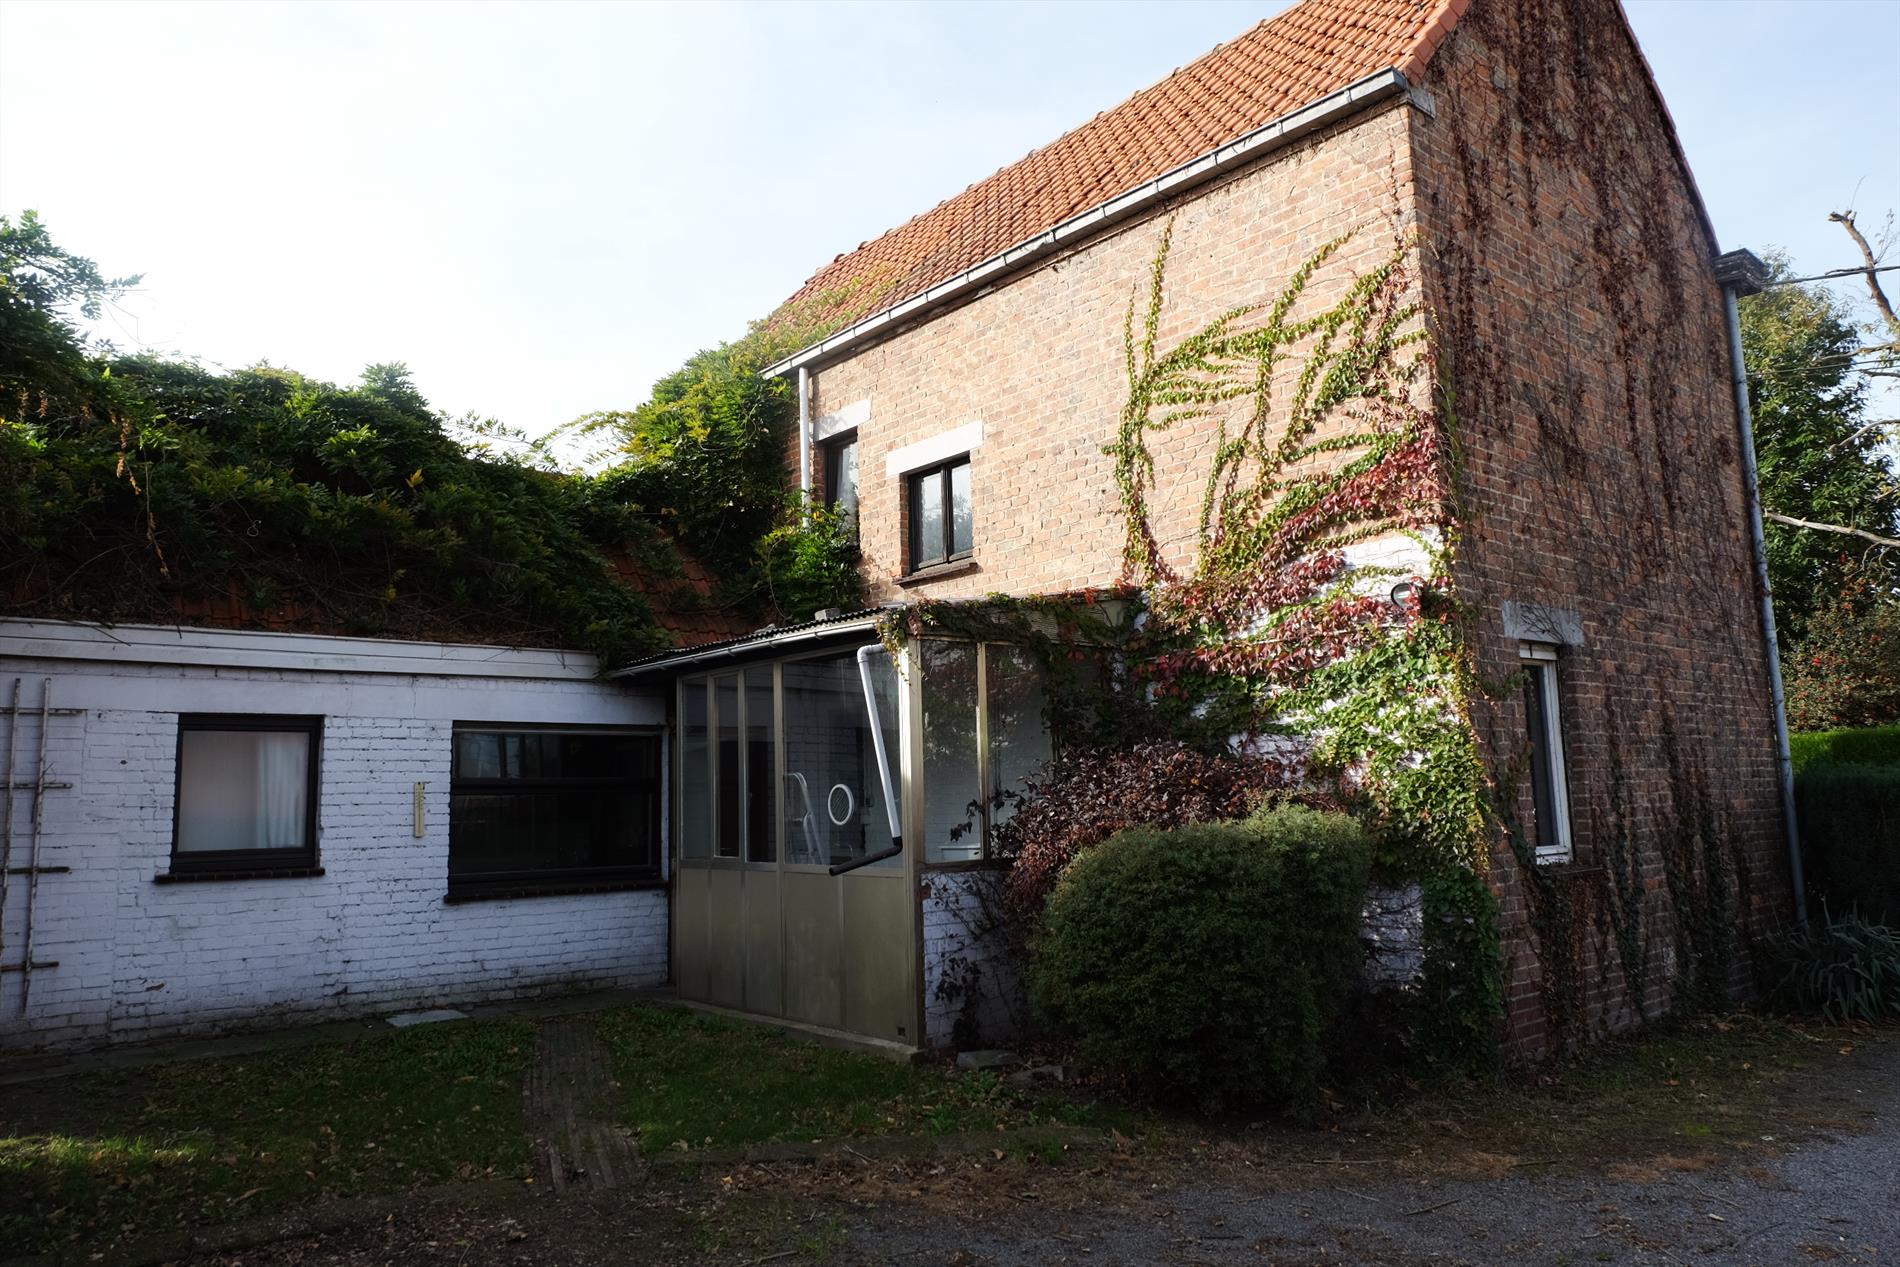 Woning verkocht in Heusden (9070)